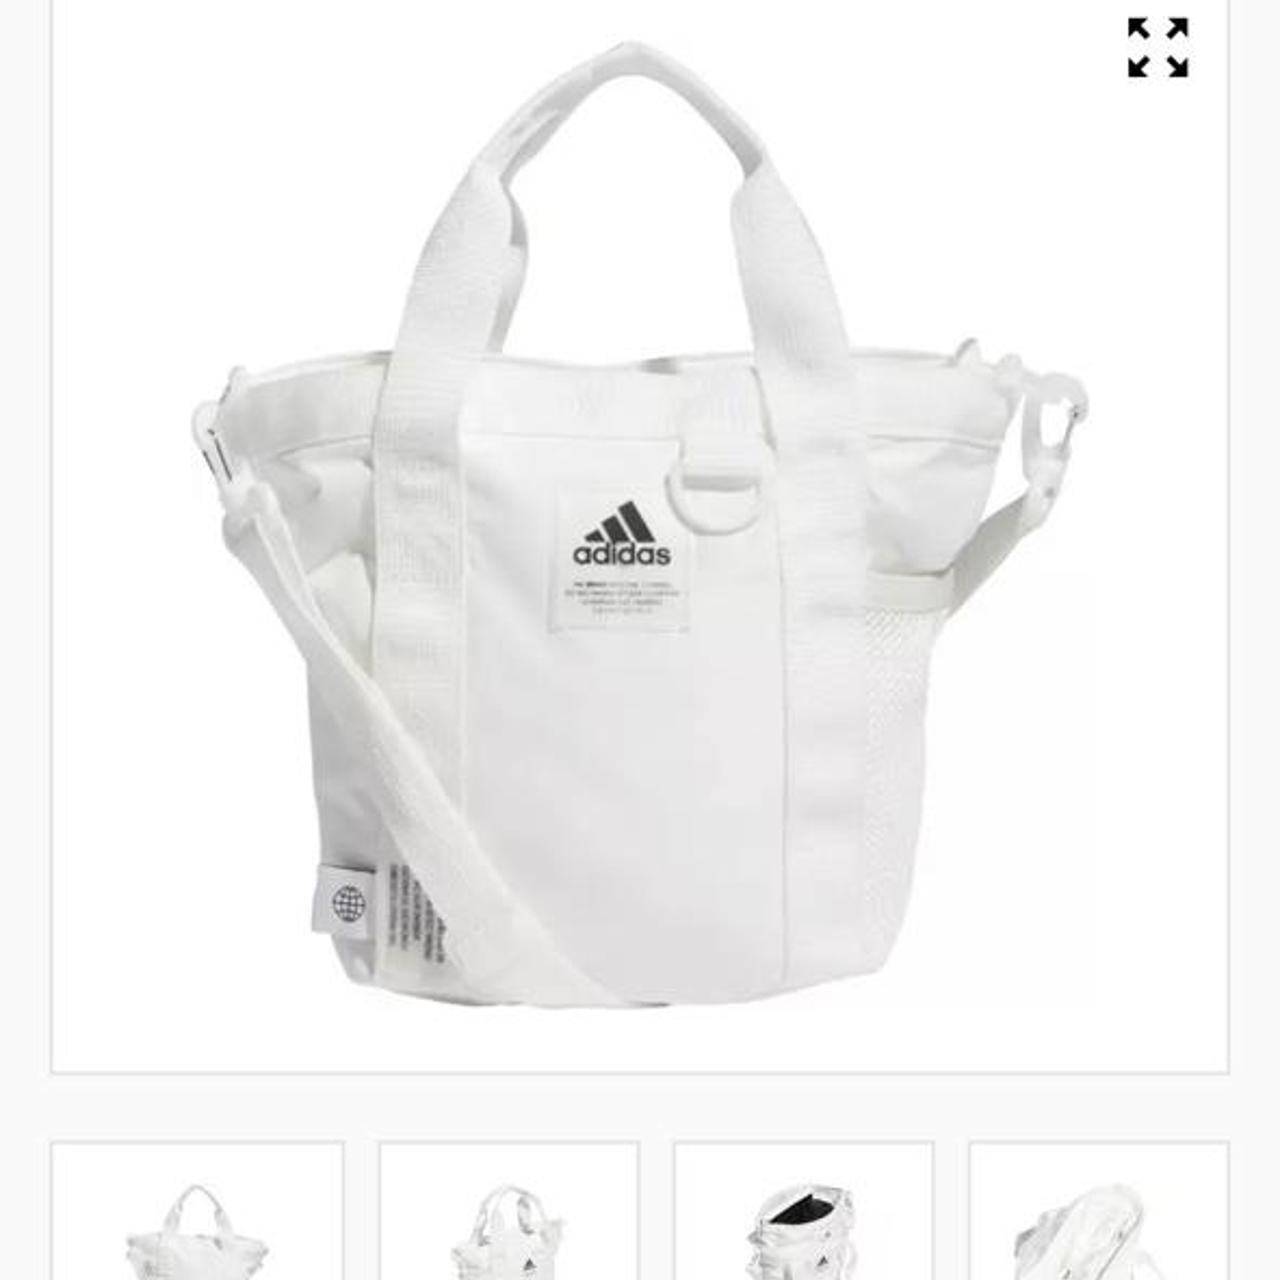 Adidas Women's Bag (2)